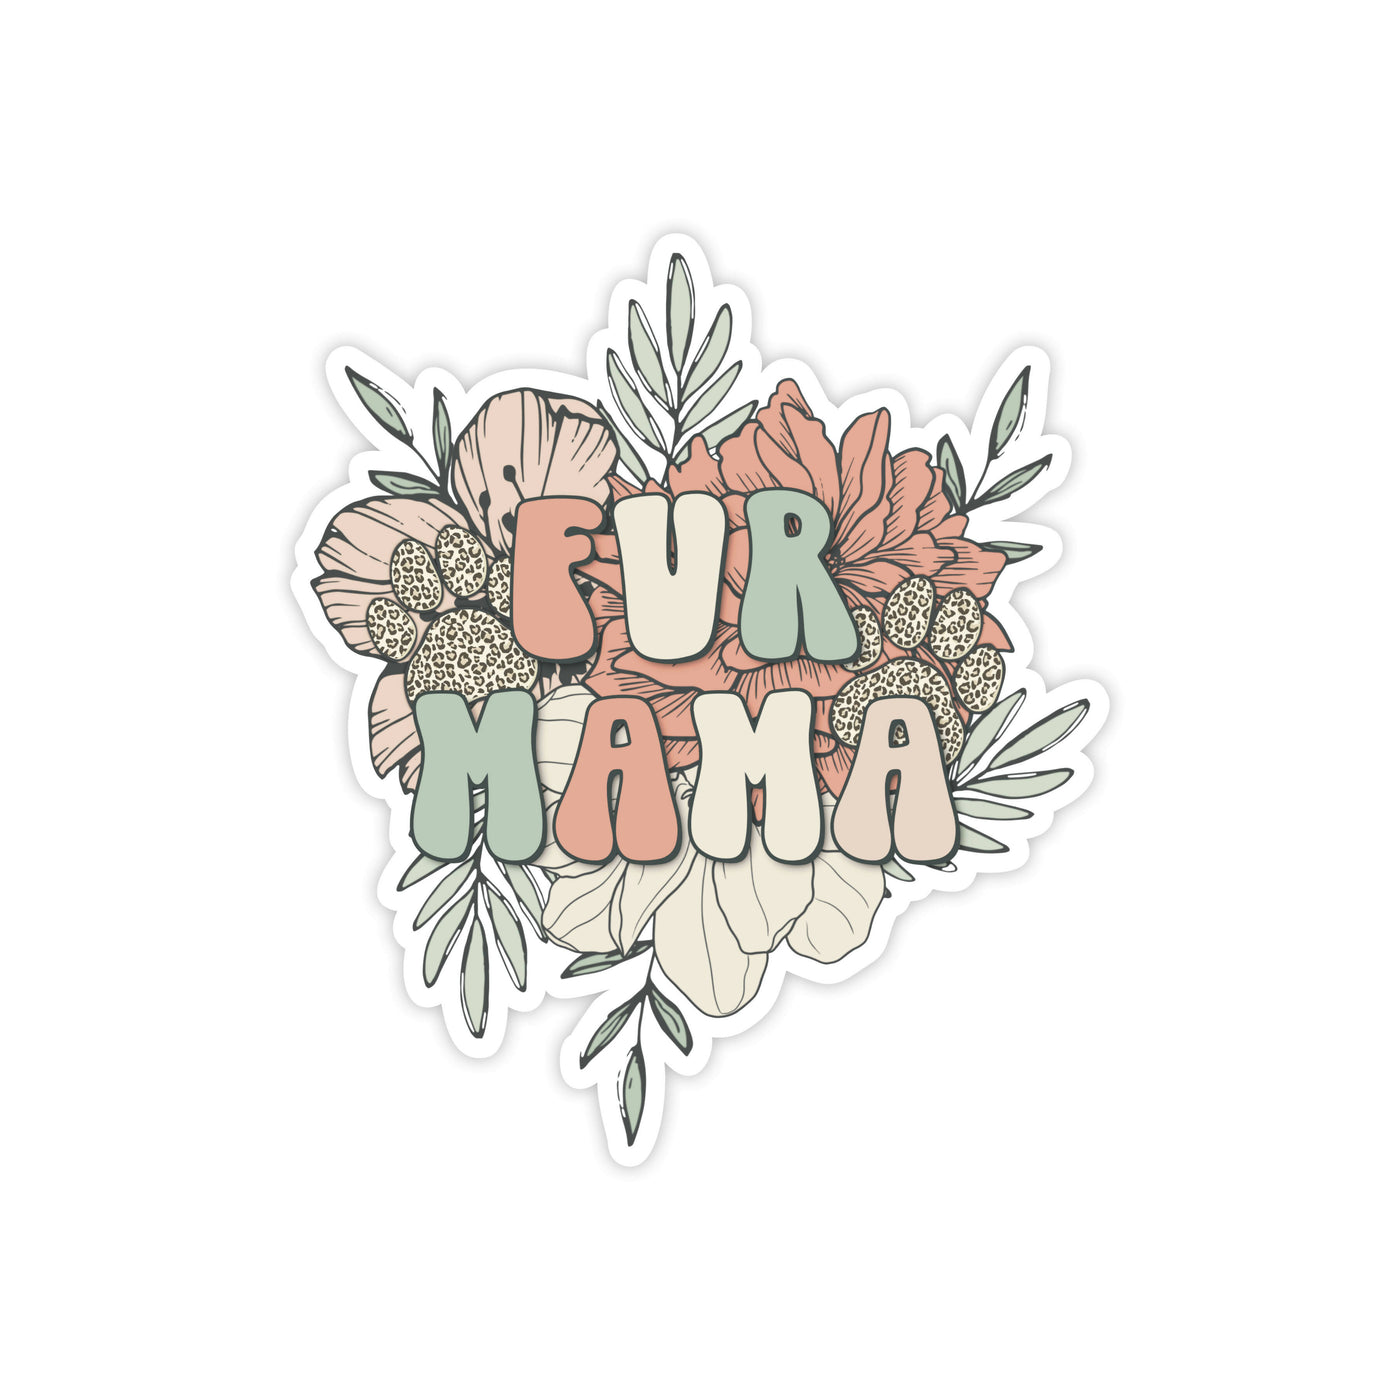 Fur Mama Sticker